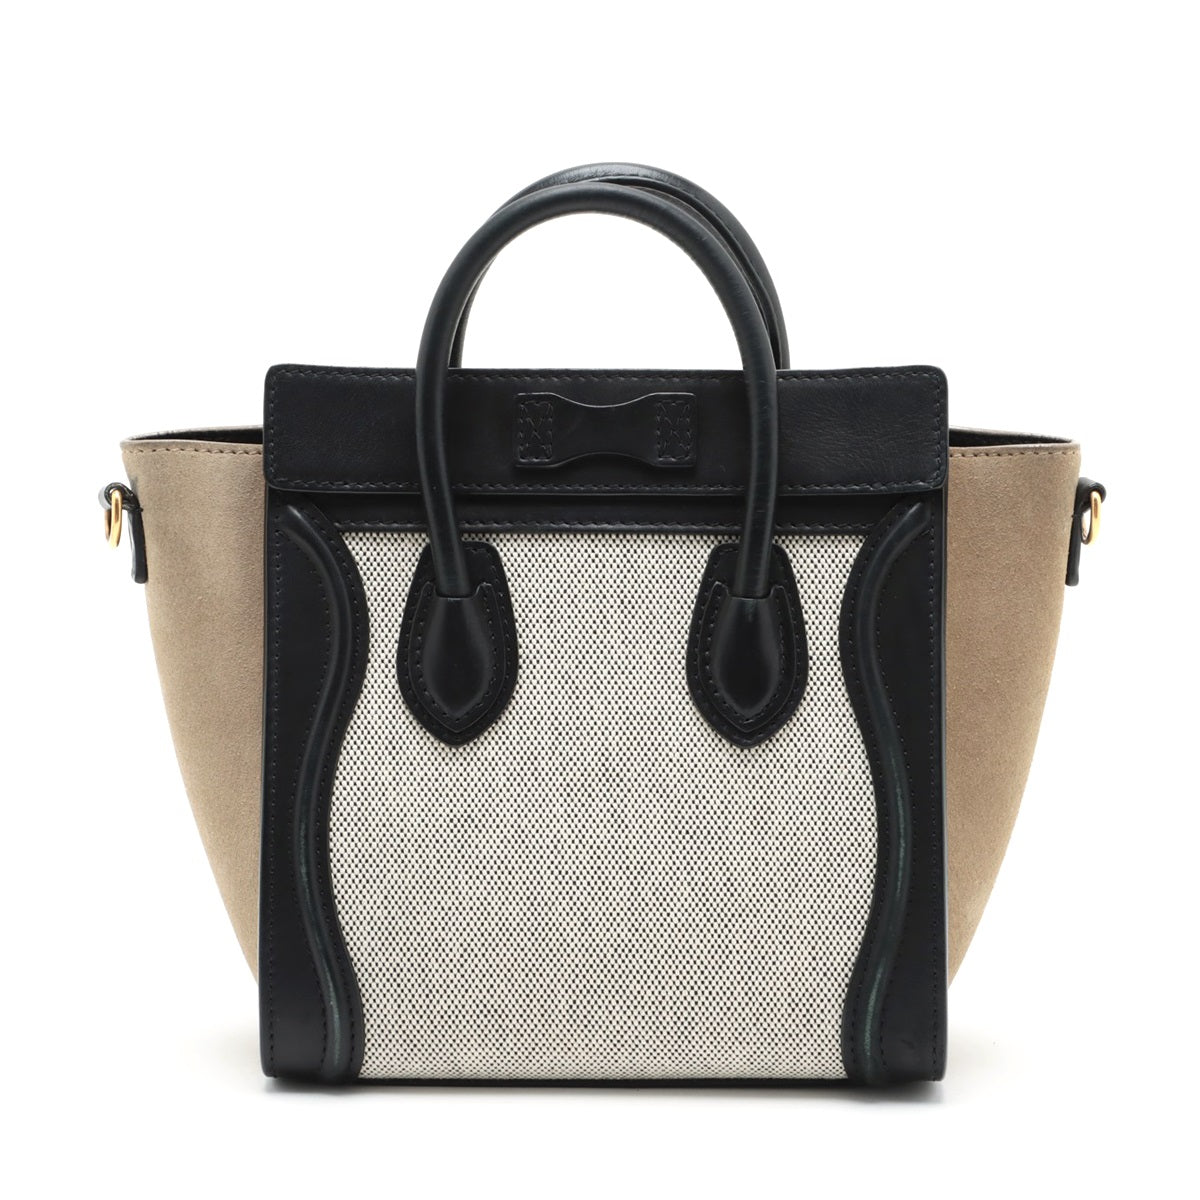 CELINE Luggage Nano shopper Leather 2way handbag black x beige